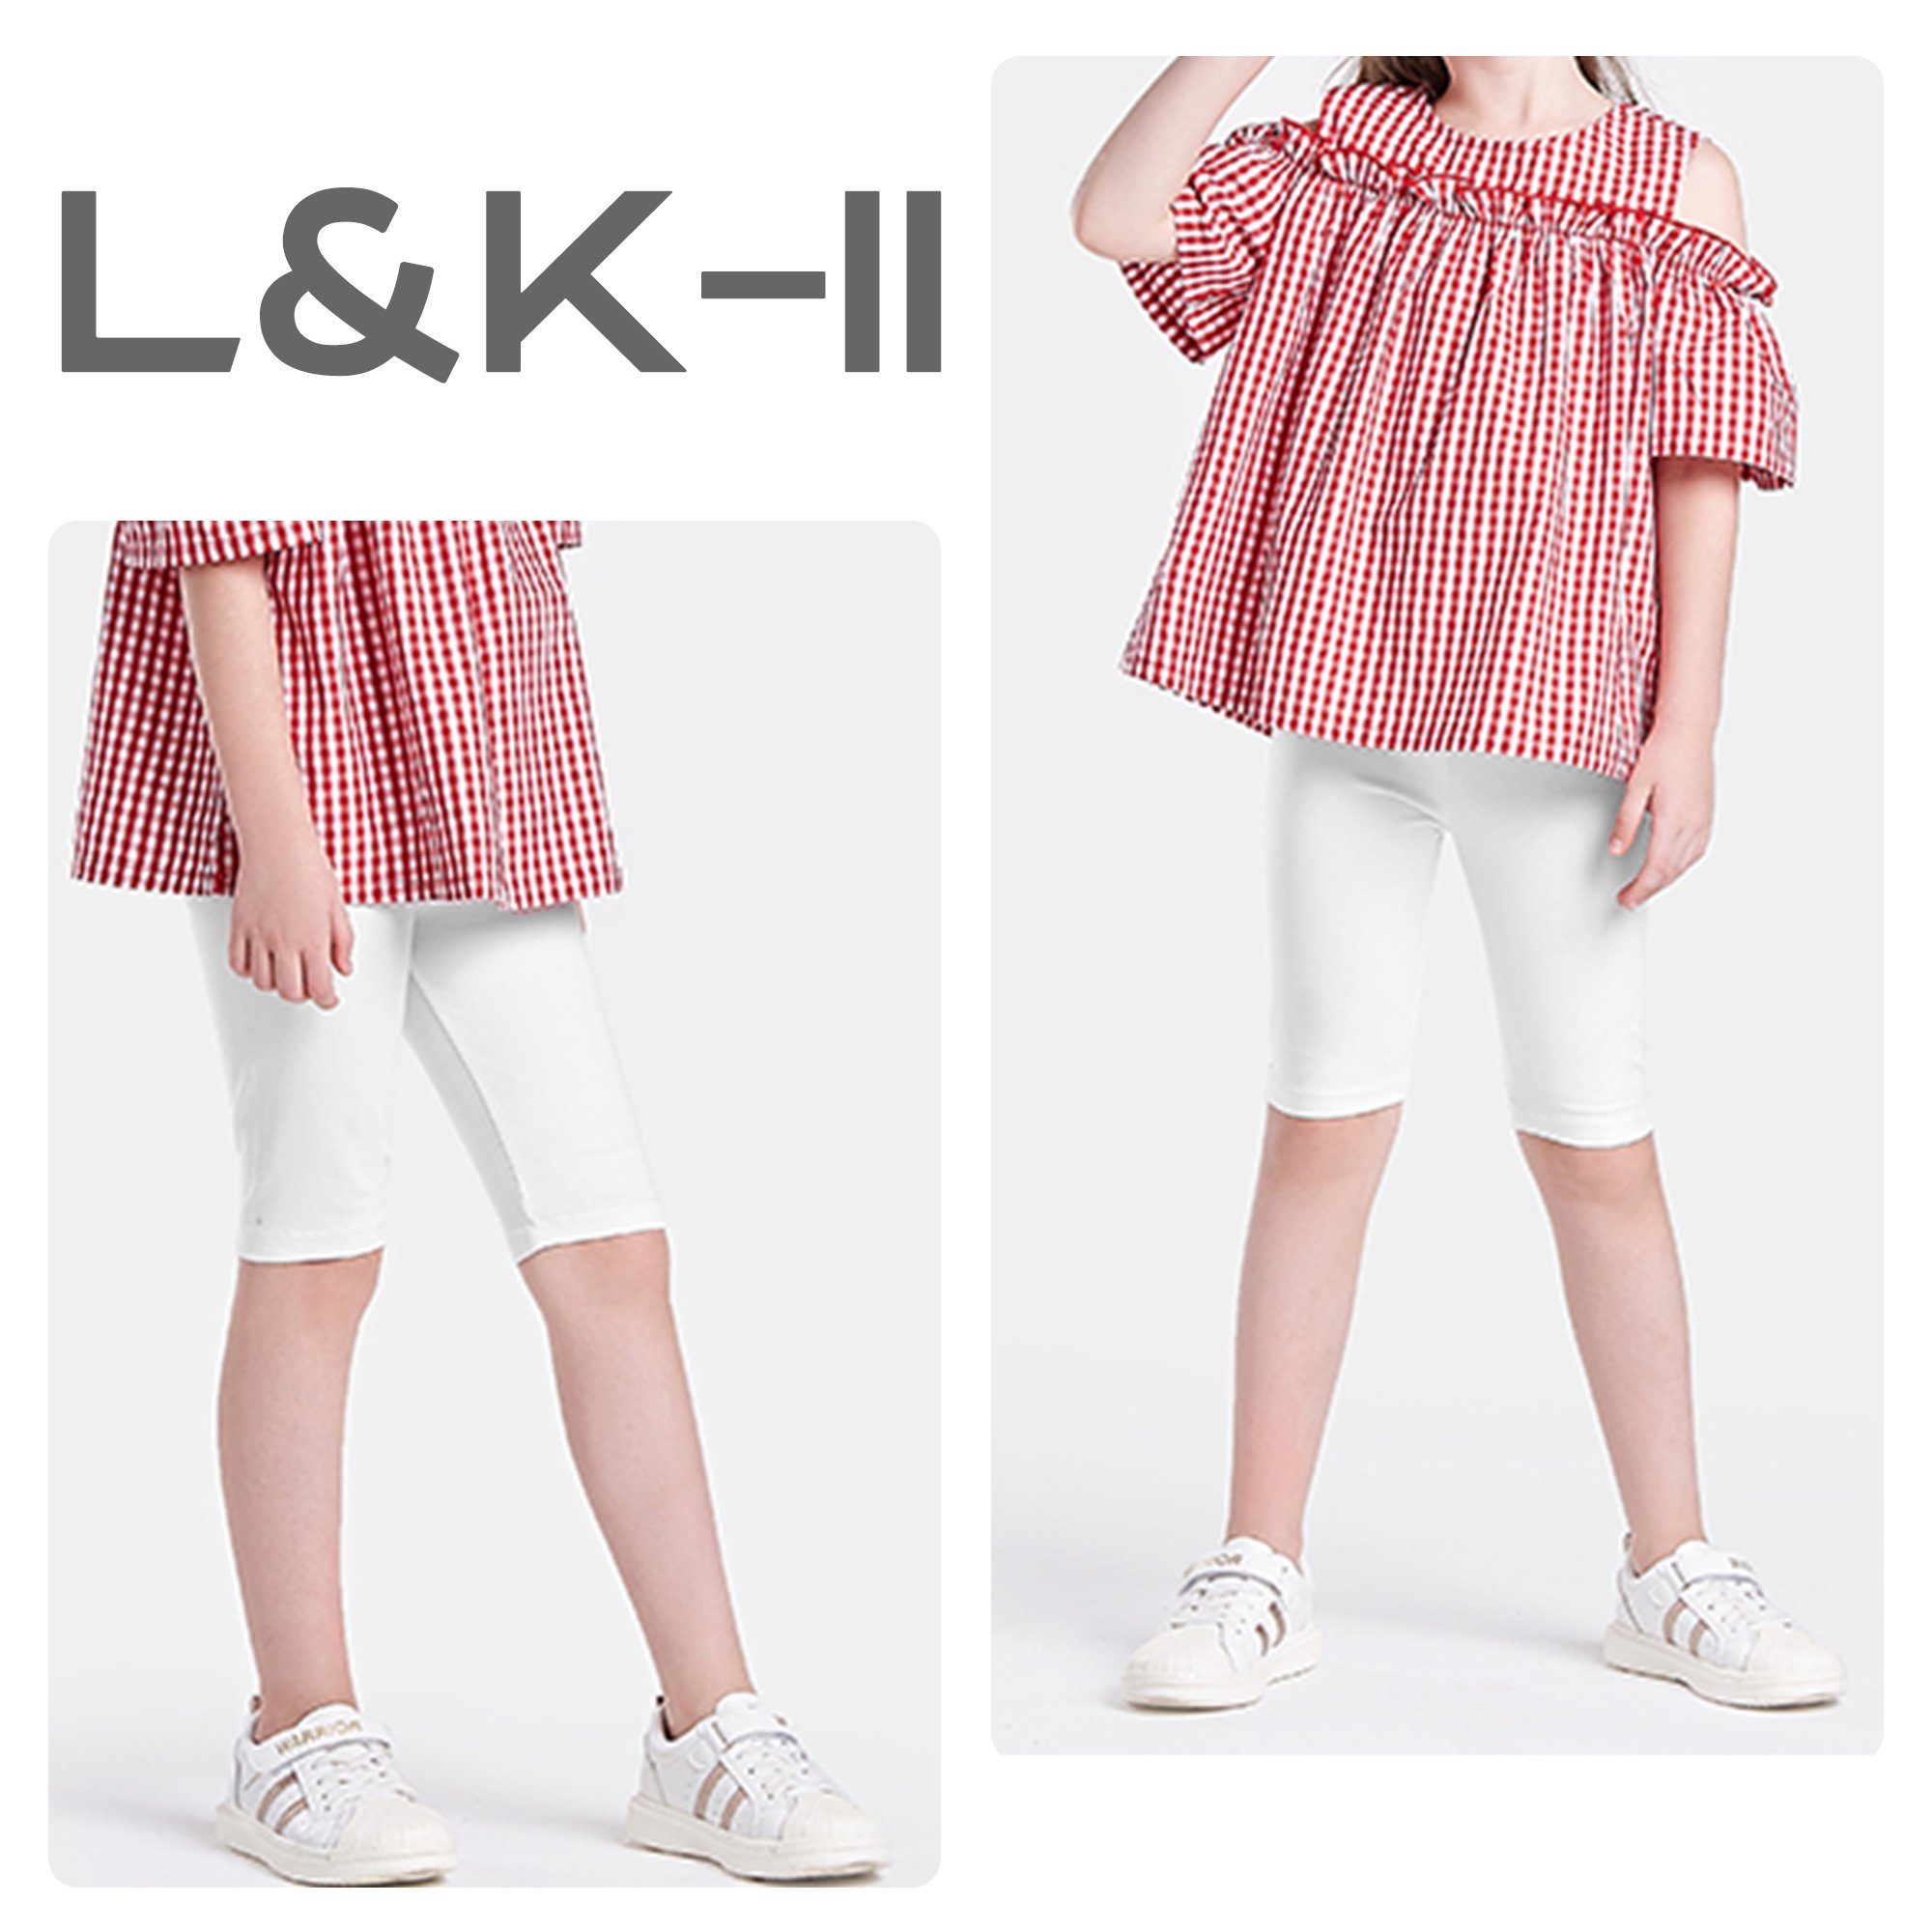 L&K-II Radlerhose (1er-Pack) Leggings Baumwolle Radlerhose Weiß Kurz 4532 Mädchen aus